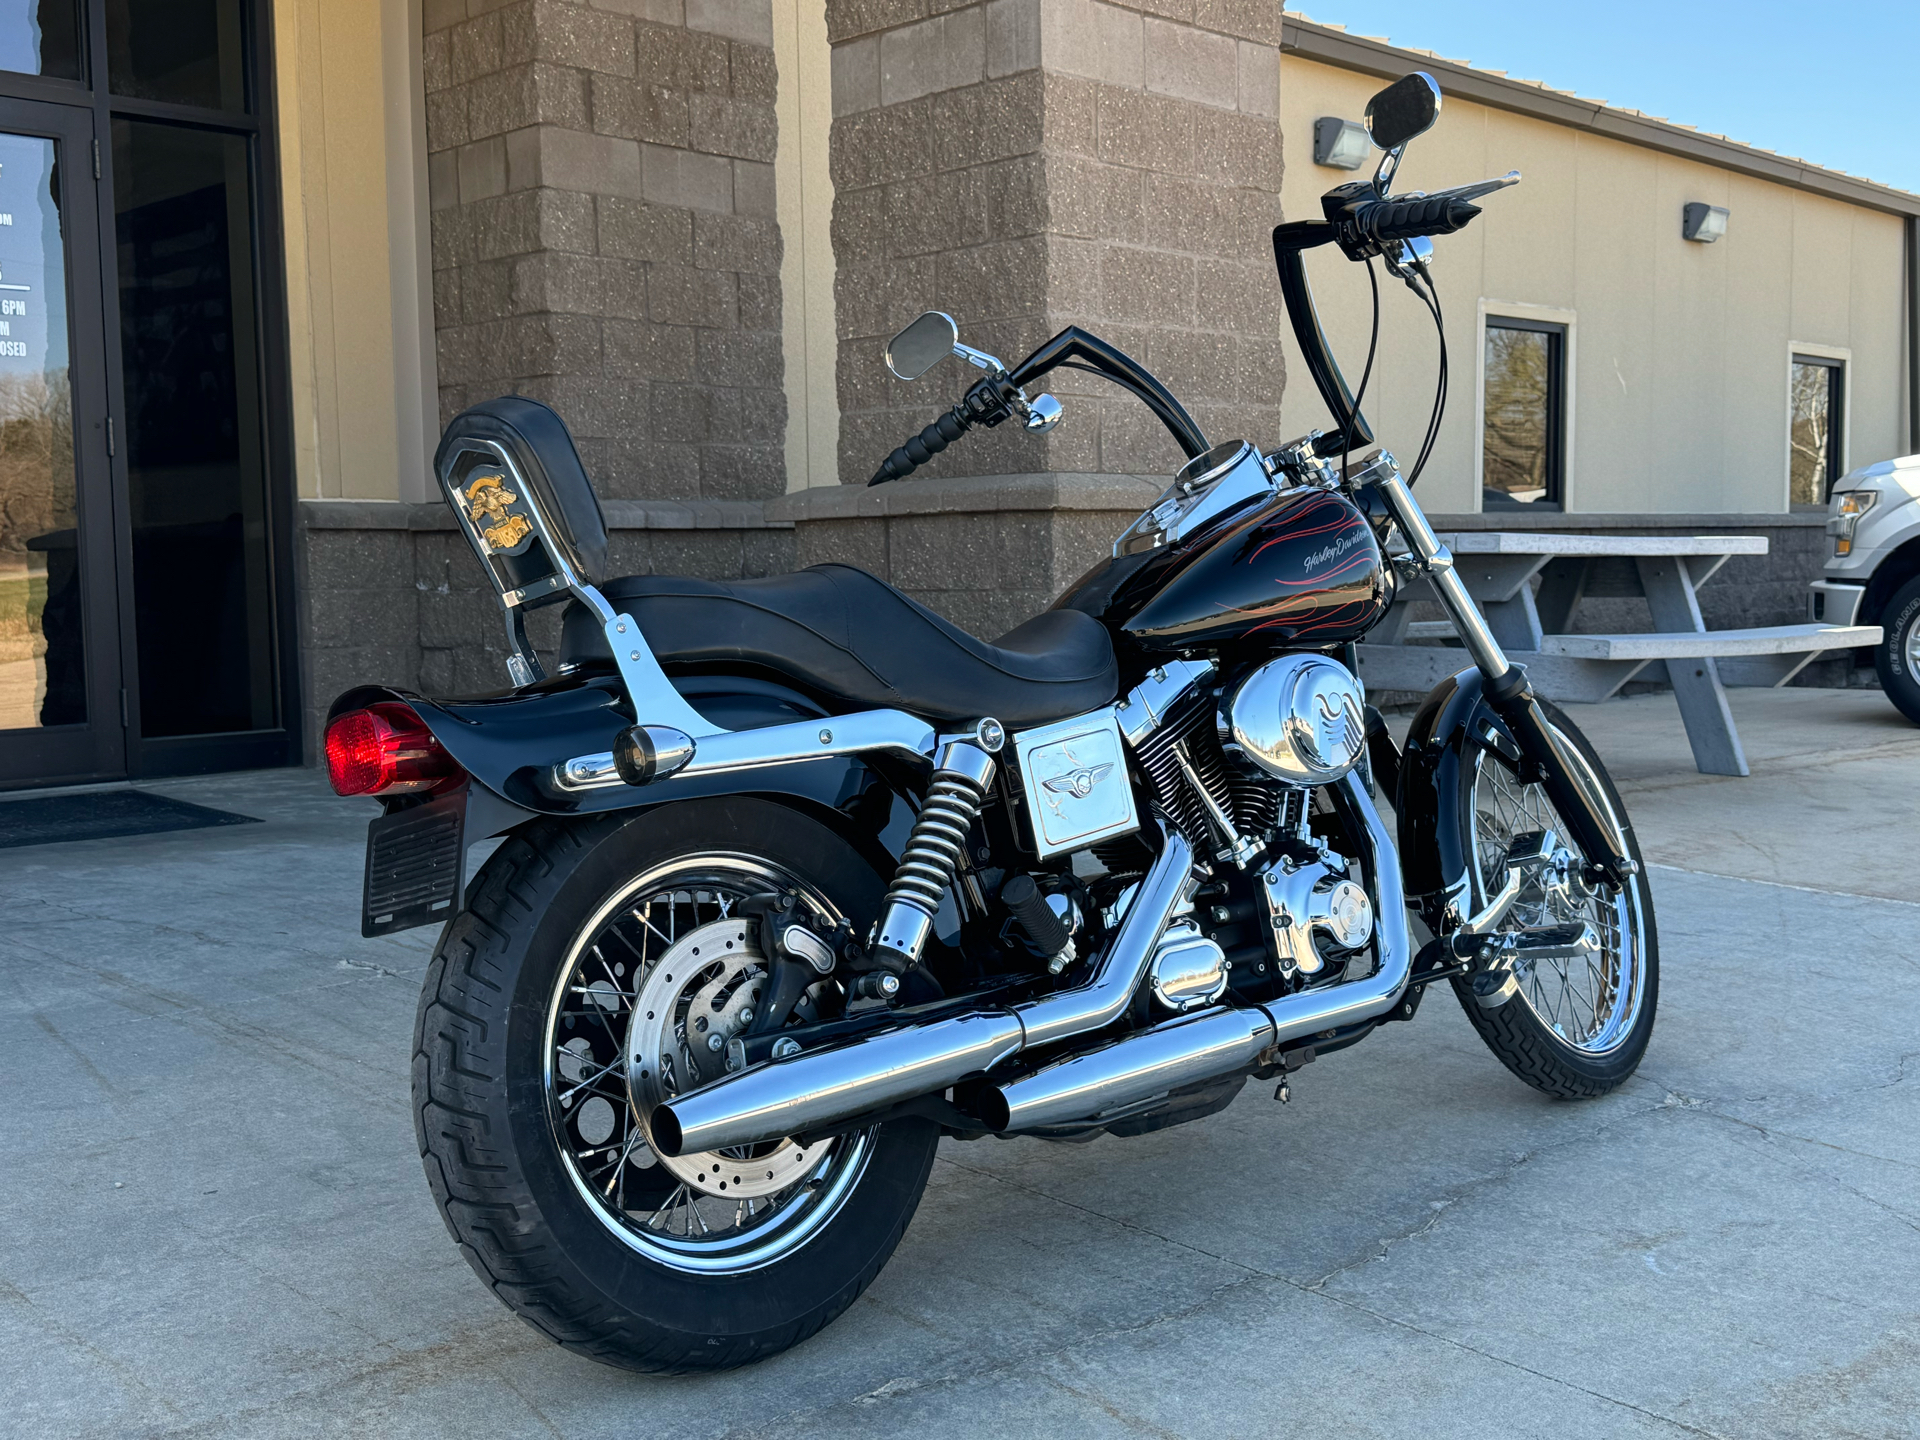 2003 Harley-Davidson FXDWG Dyna Wide Glide® in Rochester, Minnesota - Photo 3